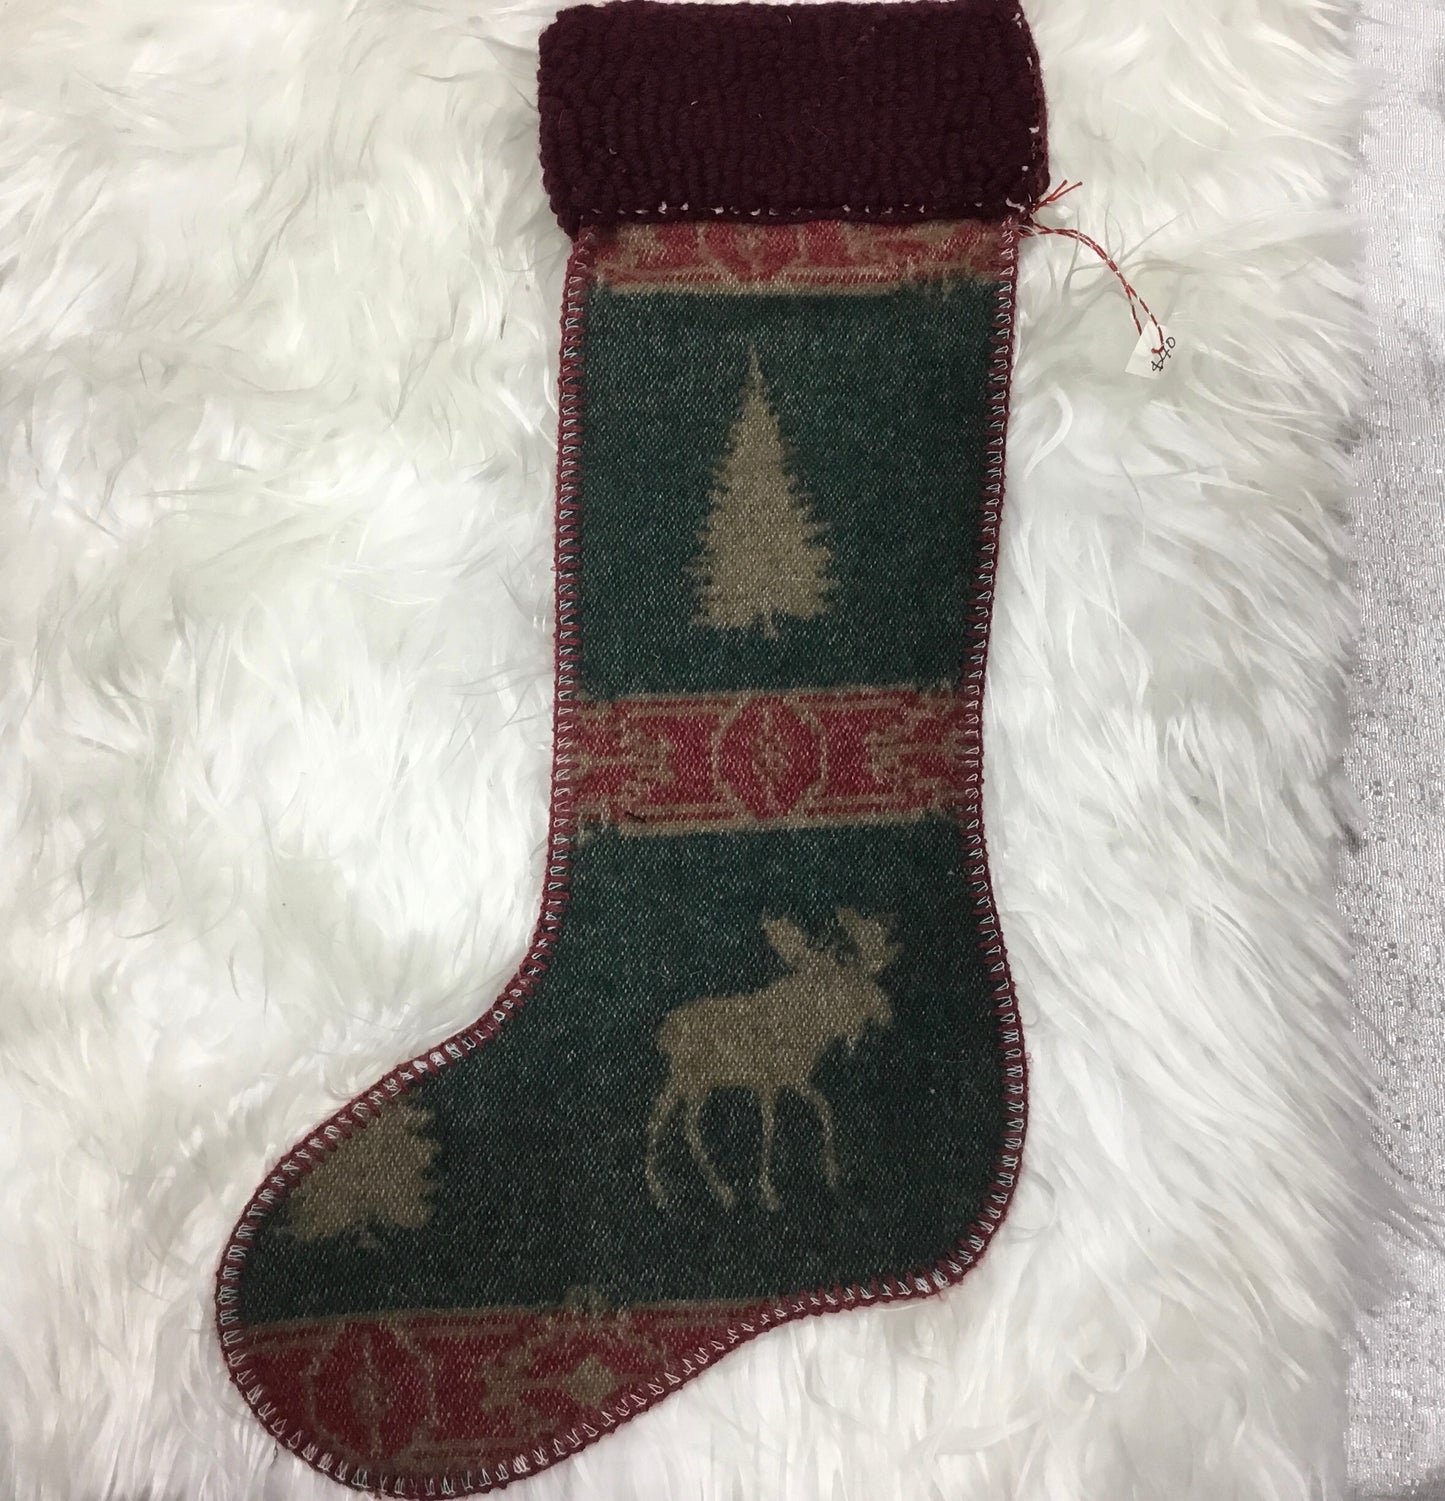 Christmas Stocking - Moose with cork backing